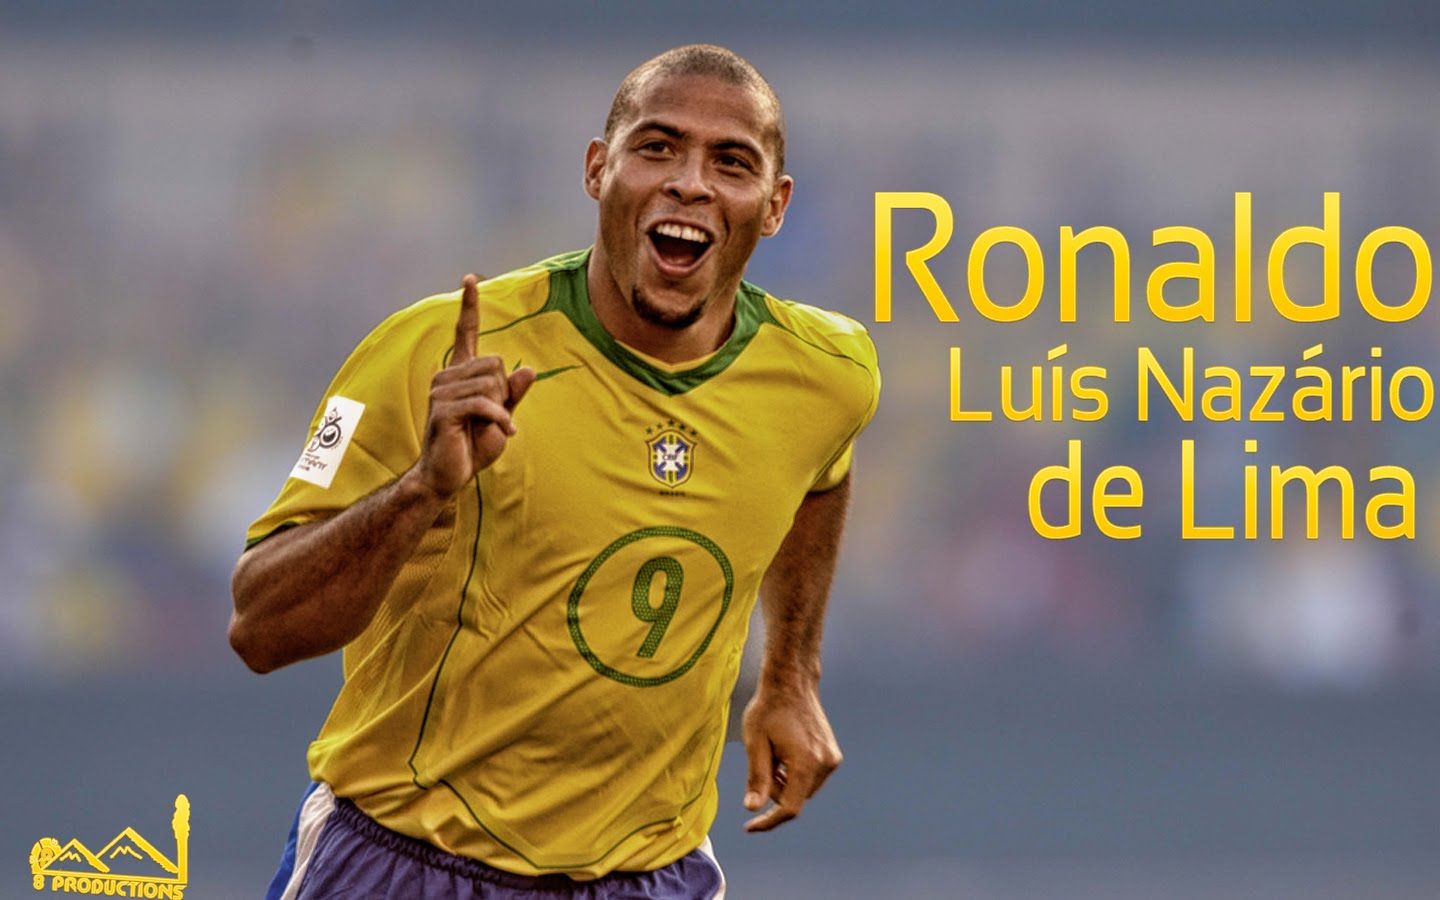 Ronaldo Brazil Wallpaper Free Ronaldo Brazil Background